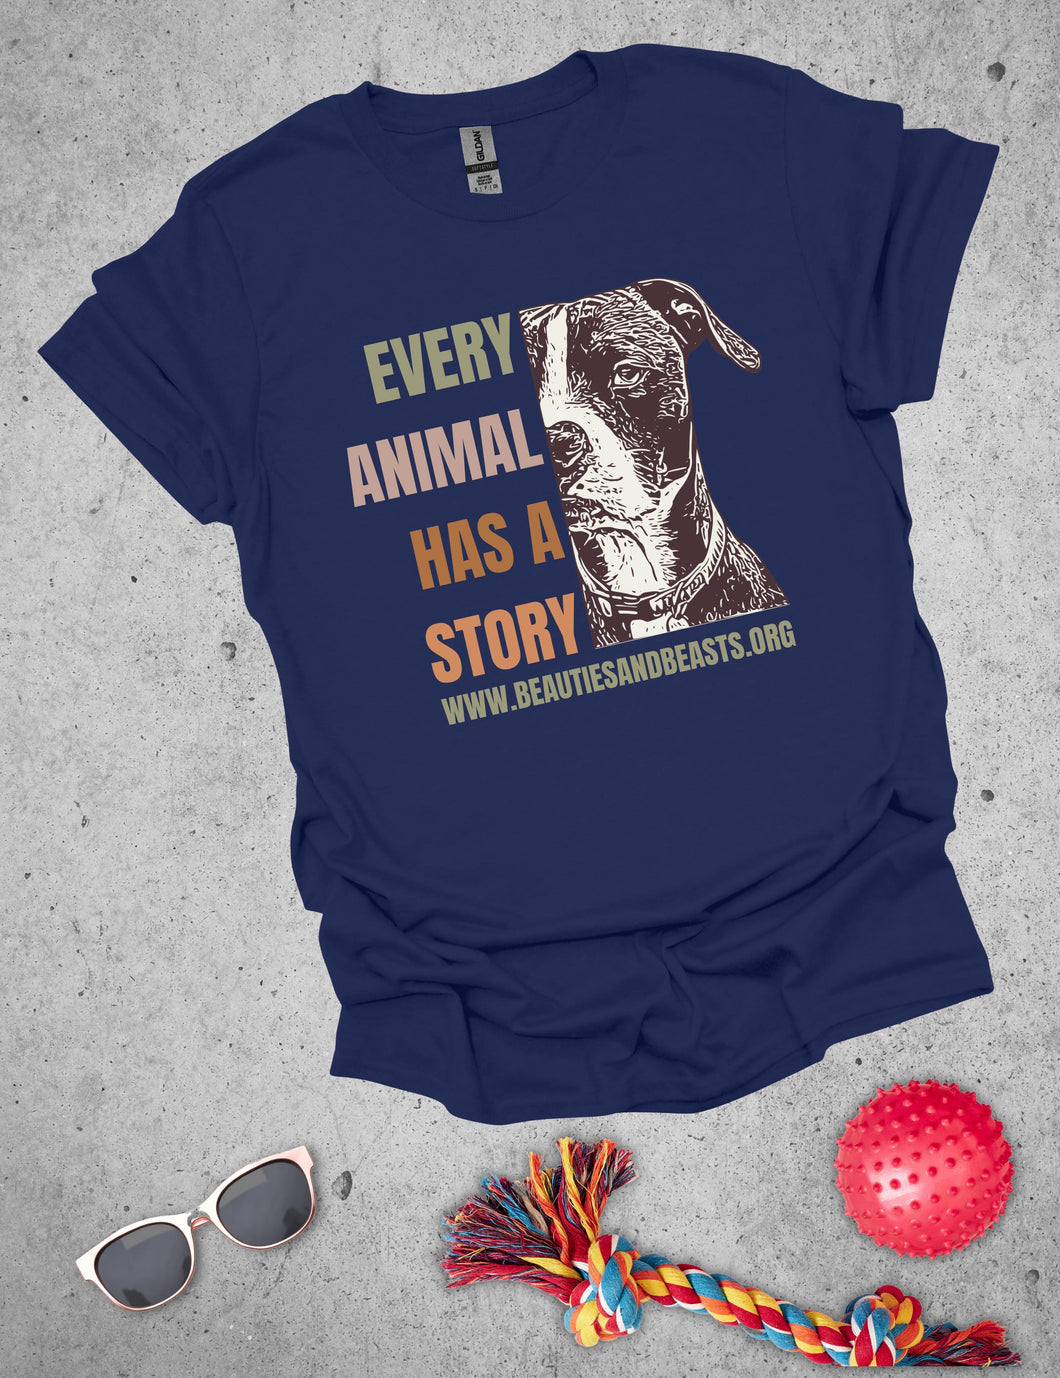 Every Animal Has a Story Tee